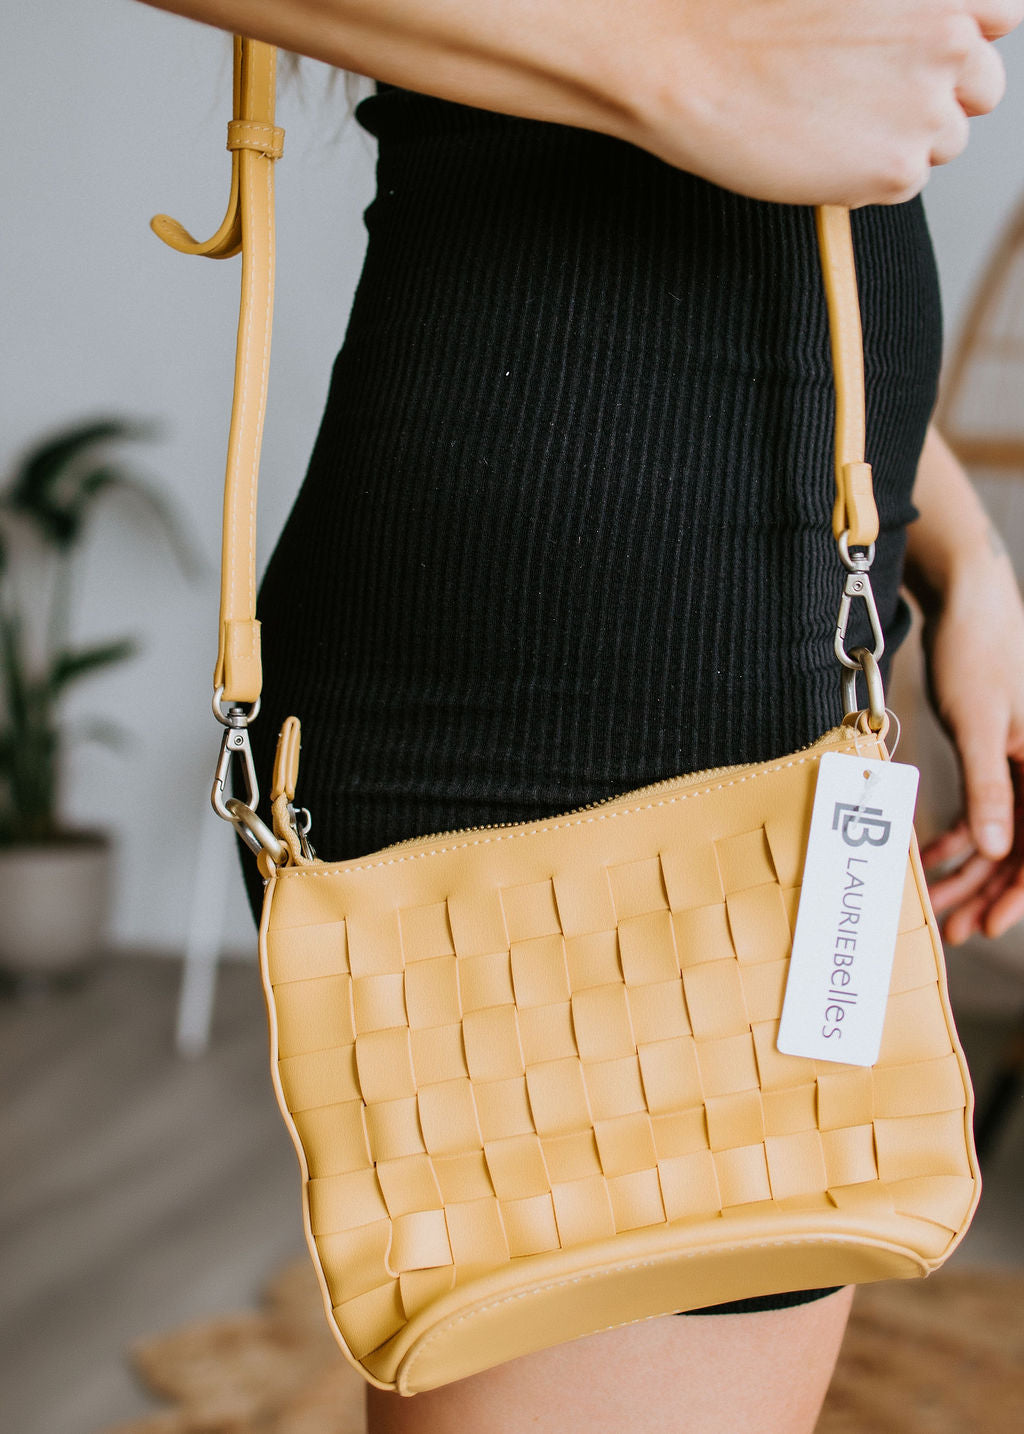 Velvet Juicy Couture Bags for Women - Vestiaire Collective